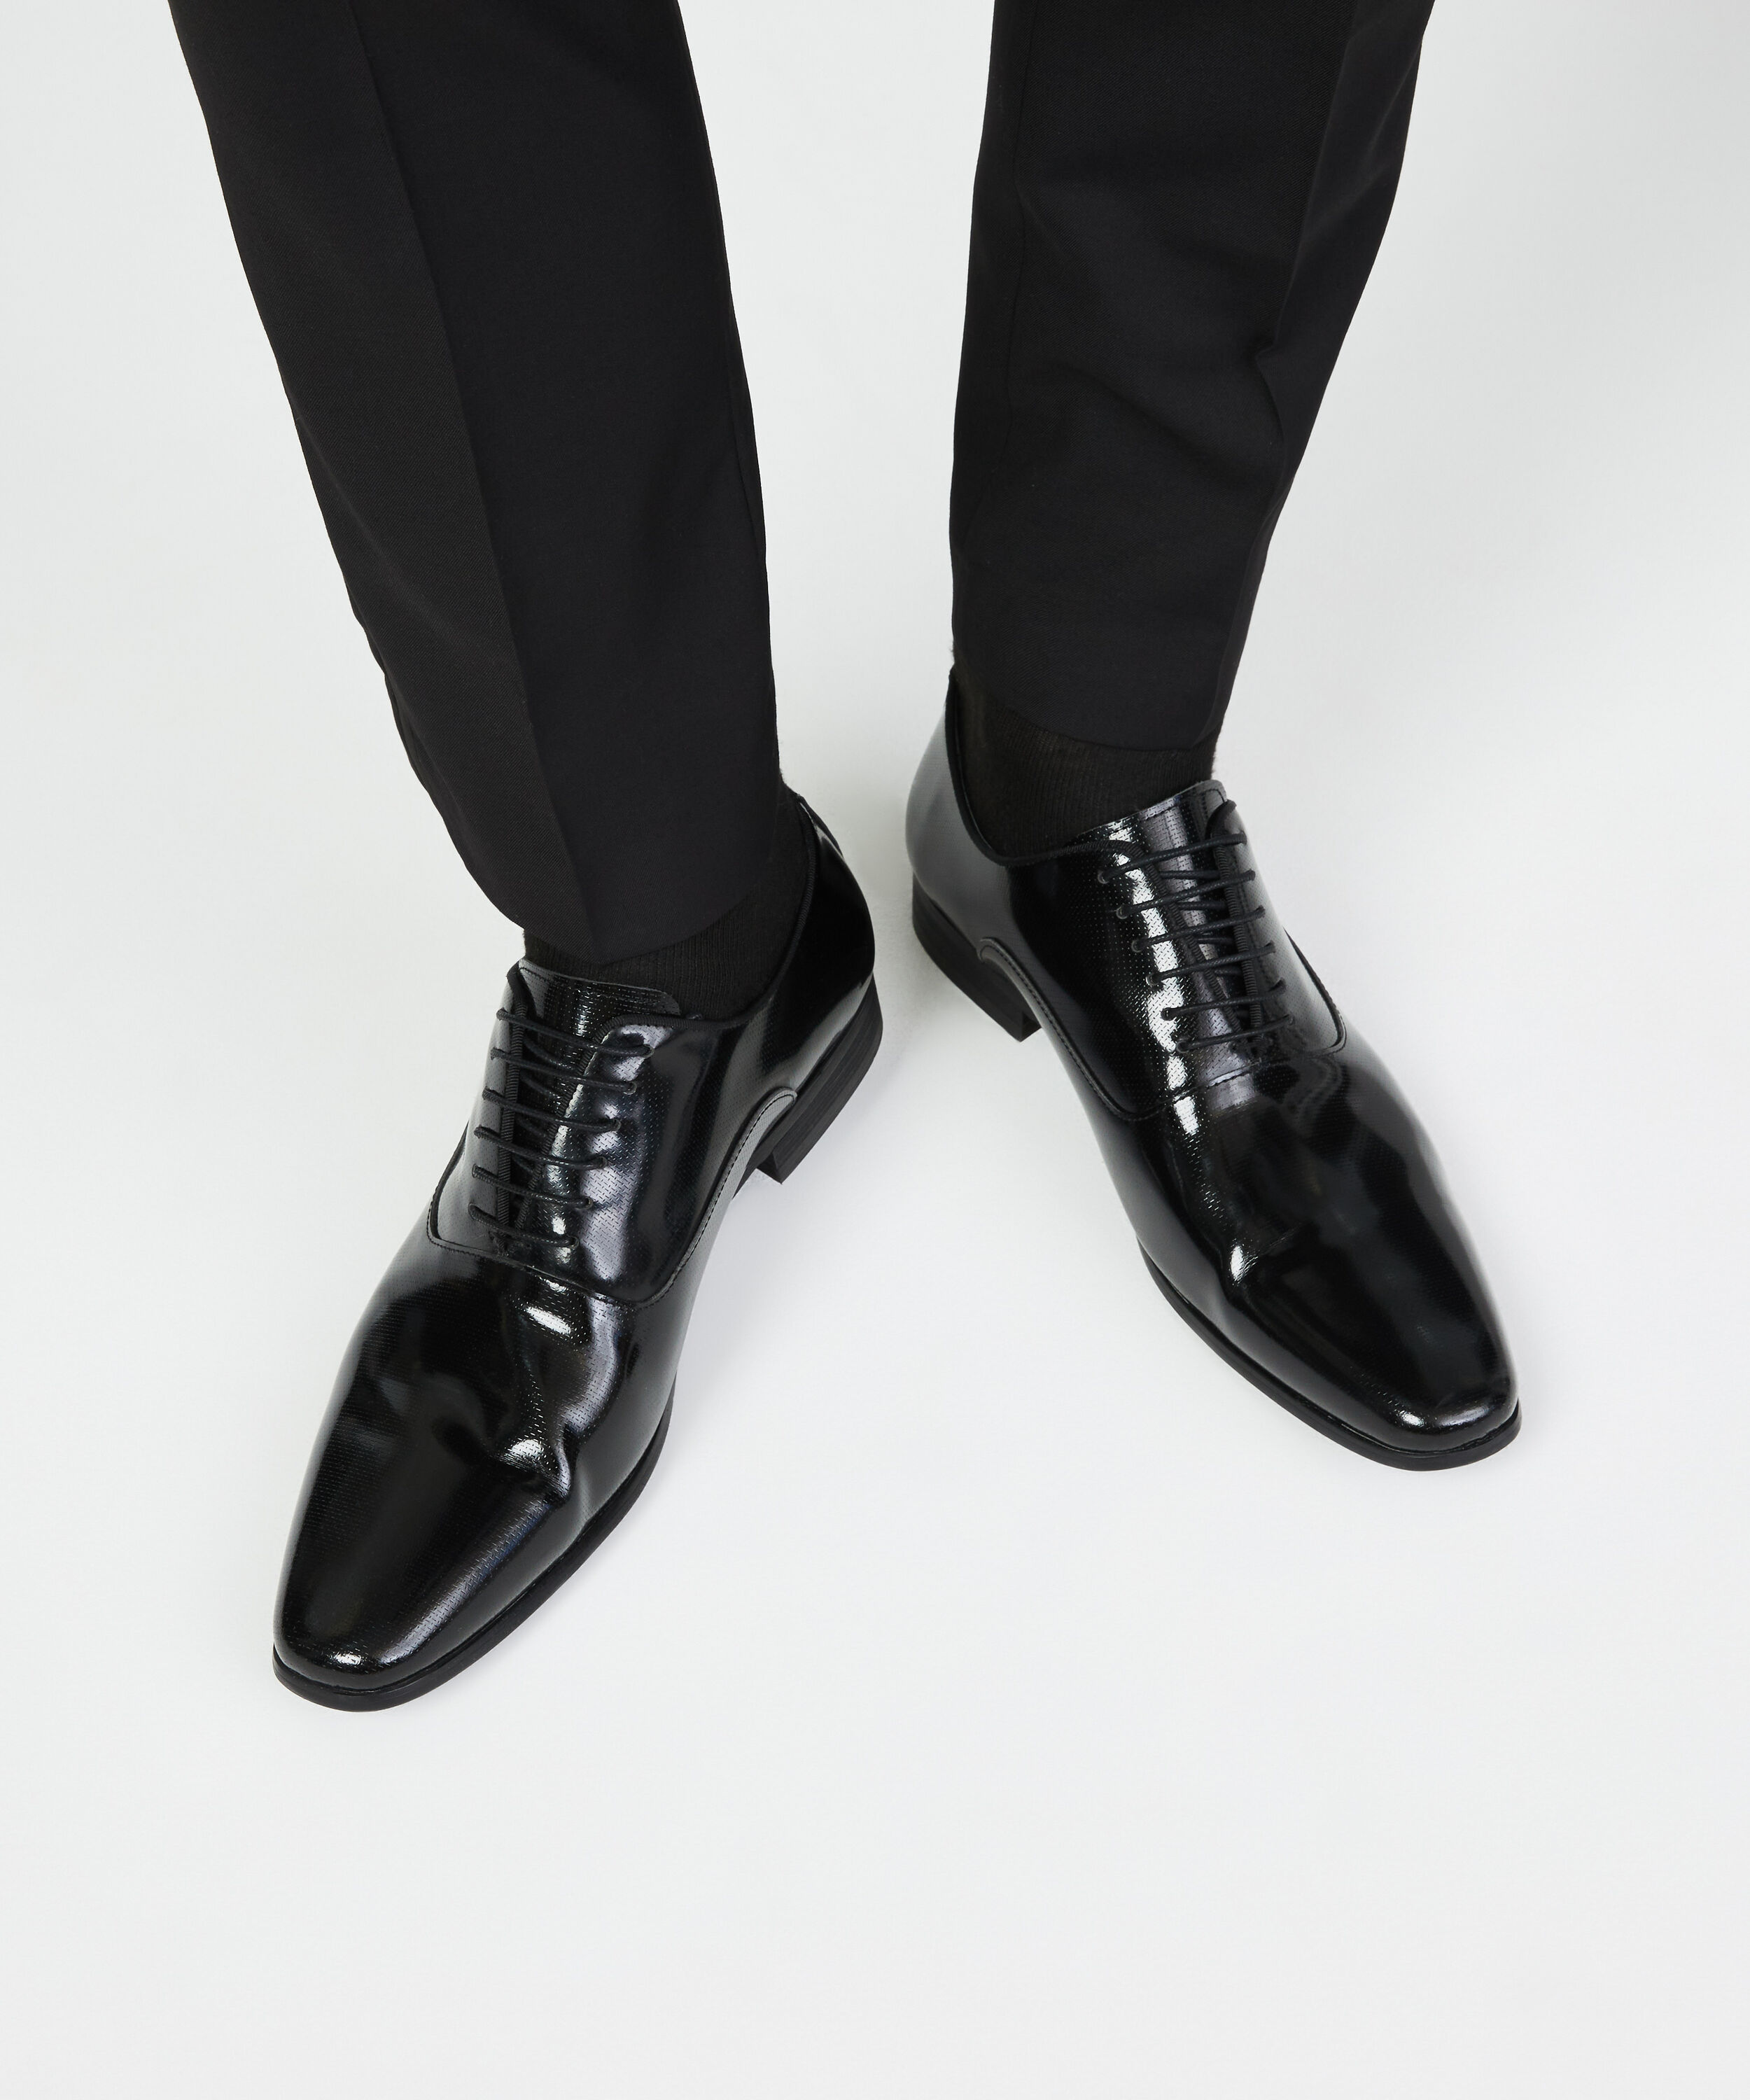 Patent Leather Oxford Dress Shoe - Black, Shoes